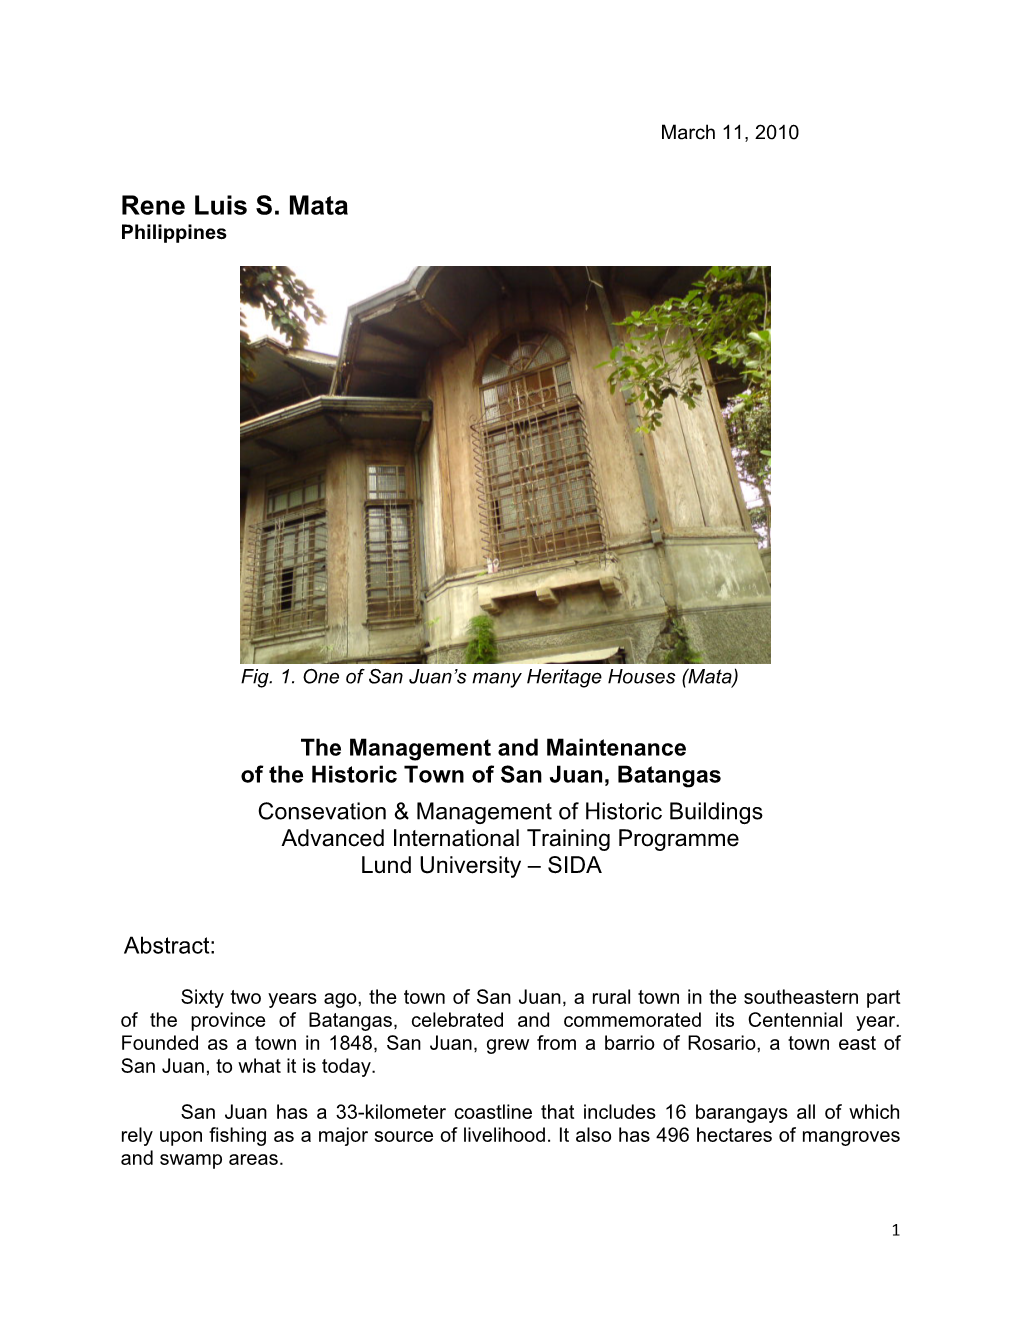 San Juan, Batangas Consevation & Management of Historic Buildings Advanced International Training Programme Lund University – SIDA